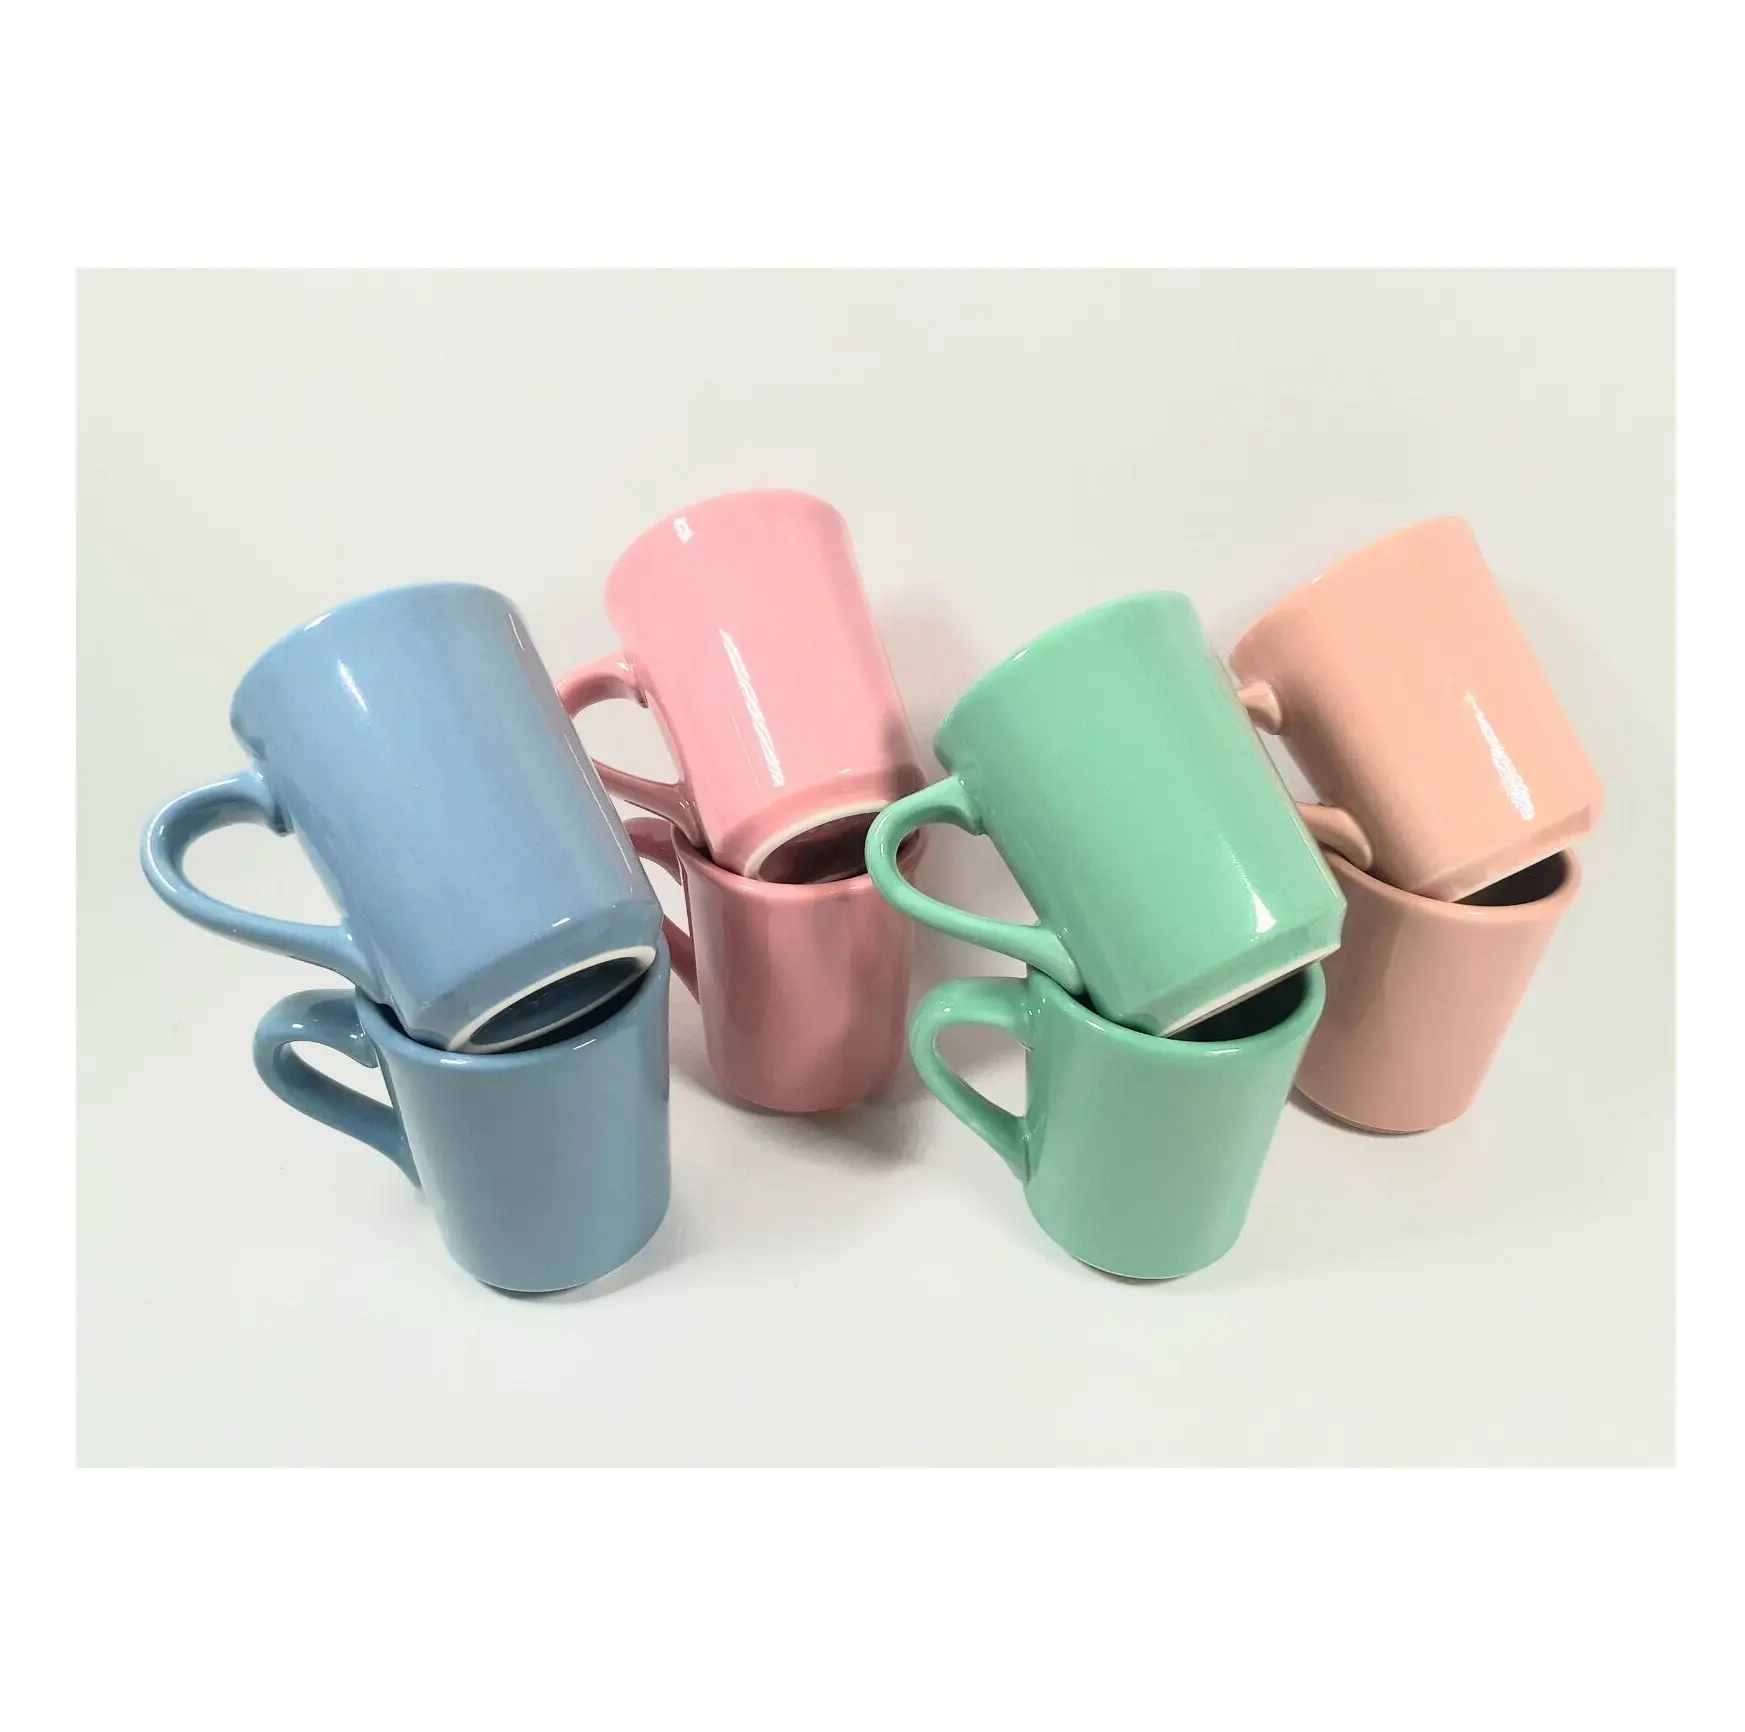 Unique Ceramic coffee mug for handicraft food safe ceramic drinking mug at wholesale price natural craft